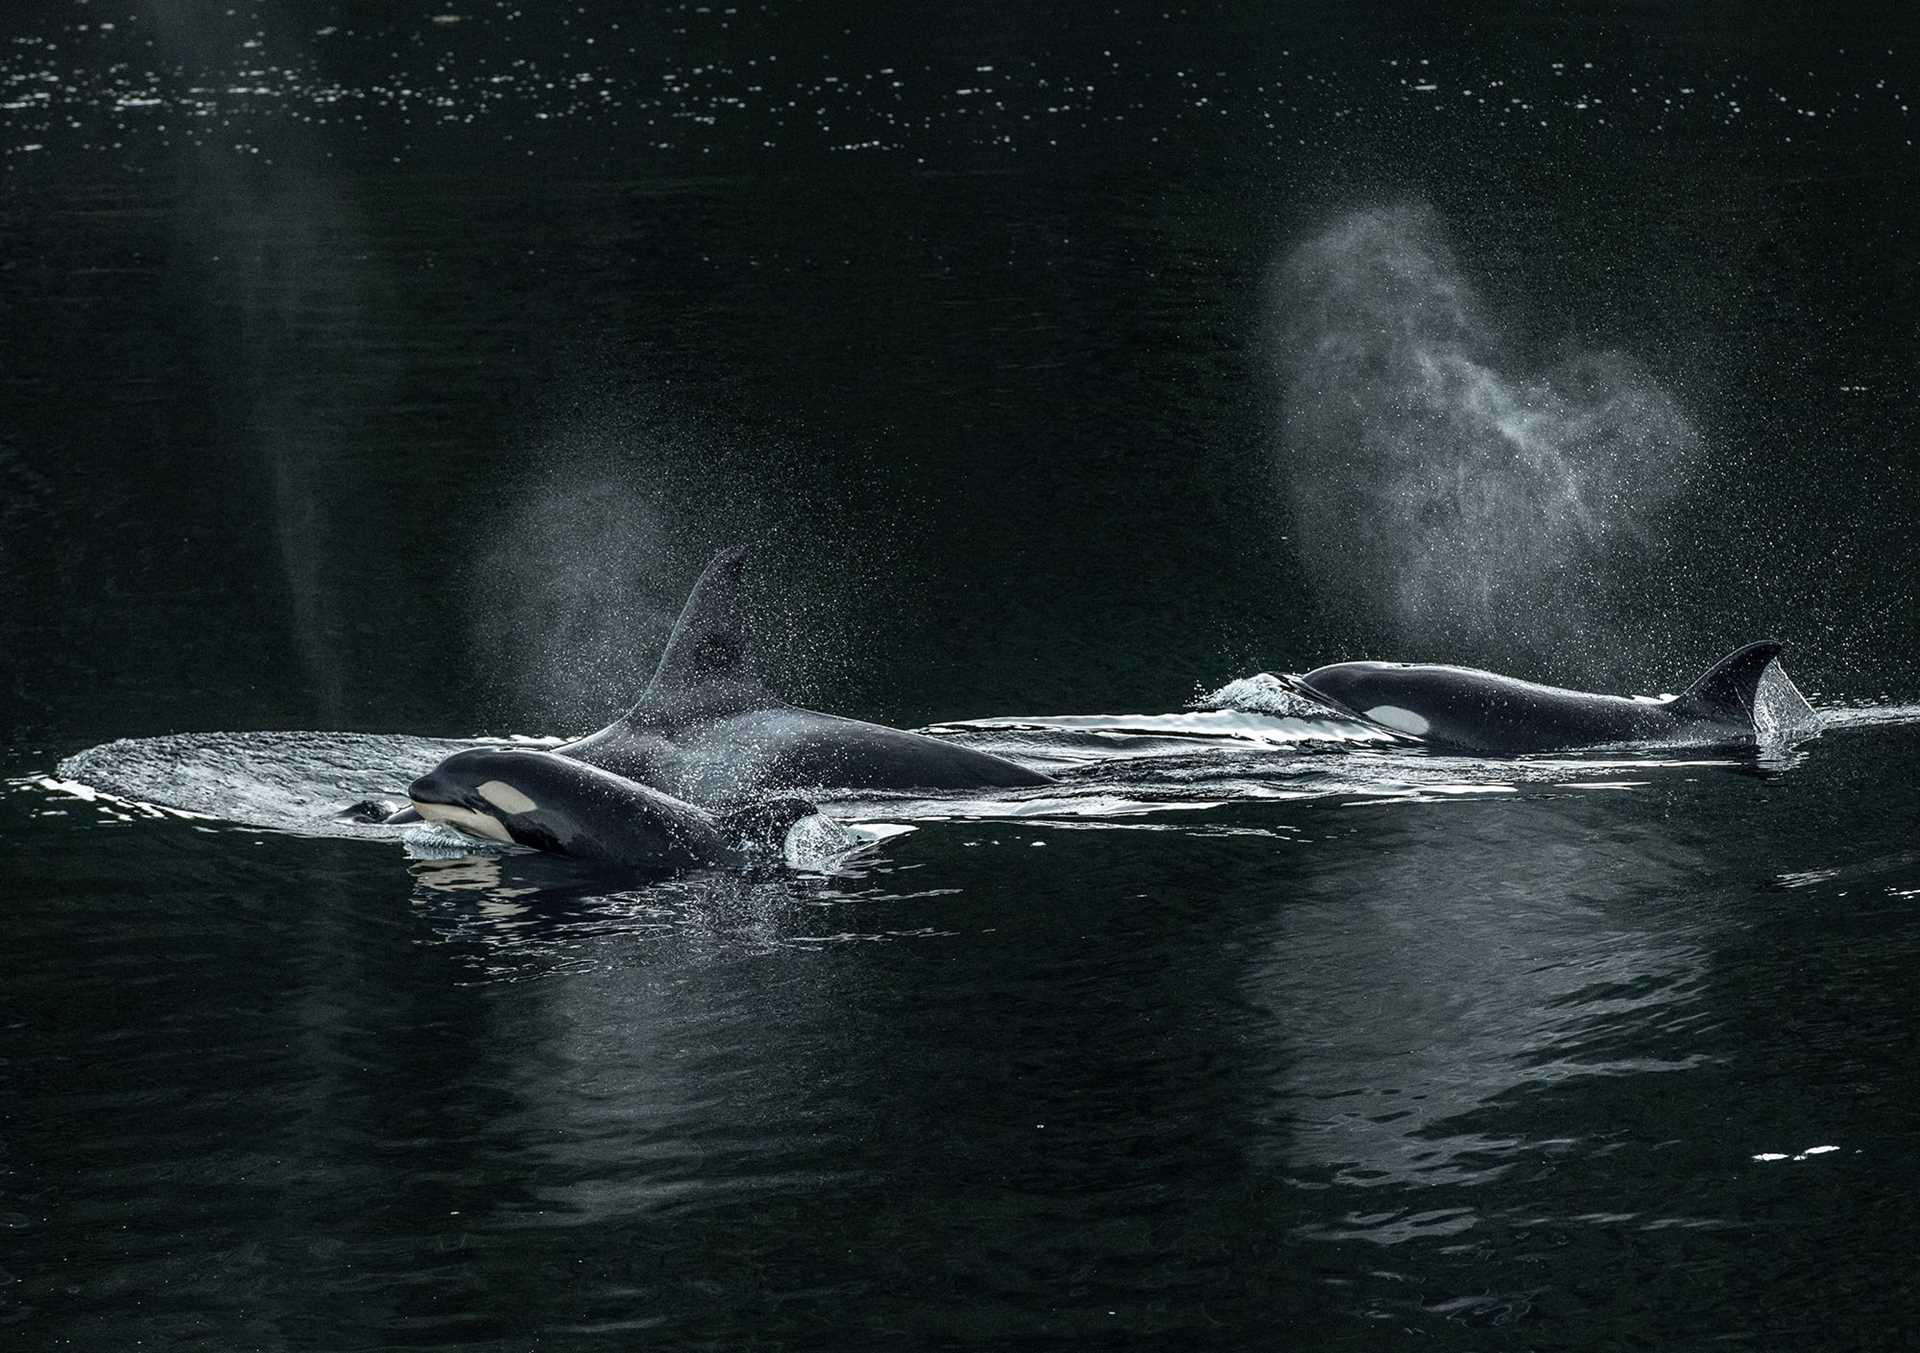 killer whales